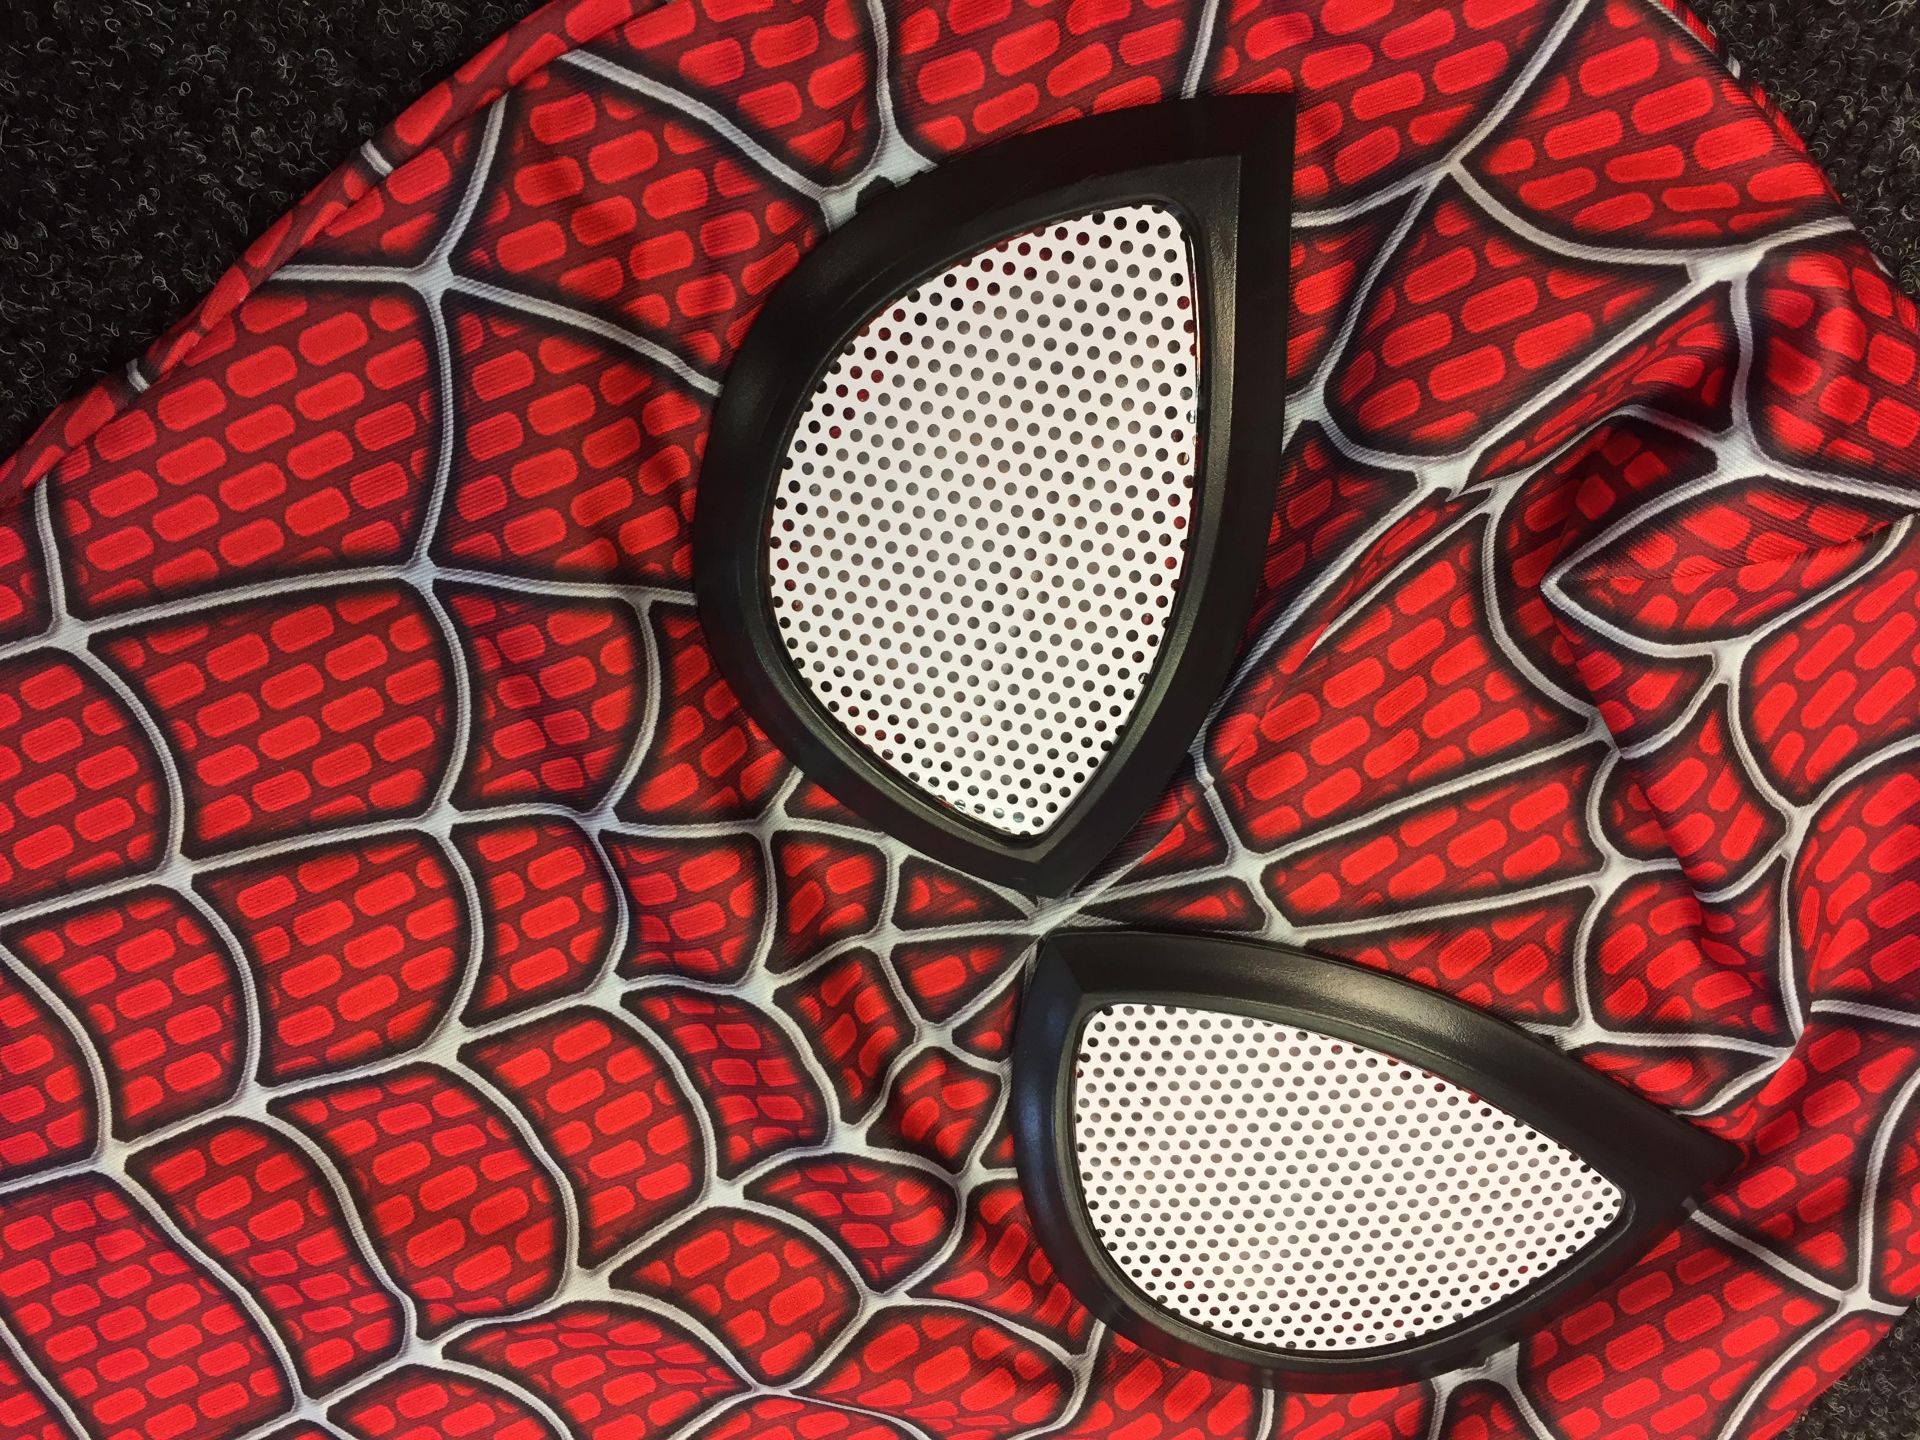 Spiderman Costume - Image 3 of 3